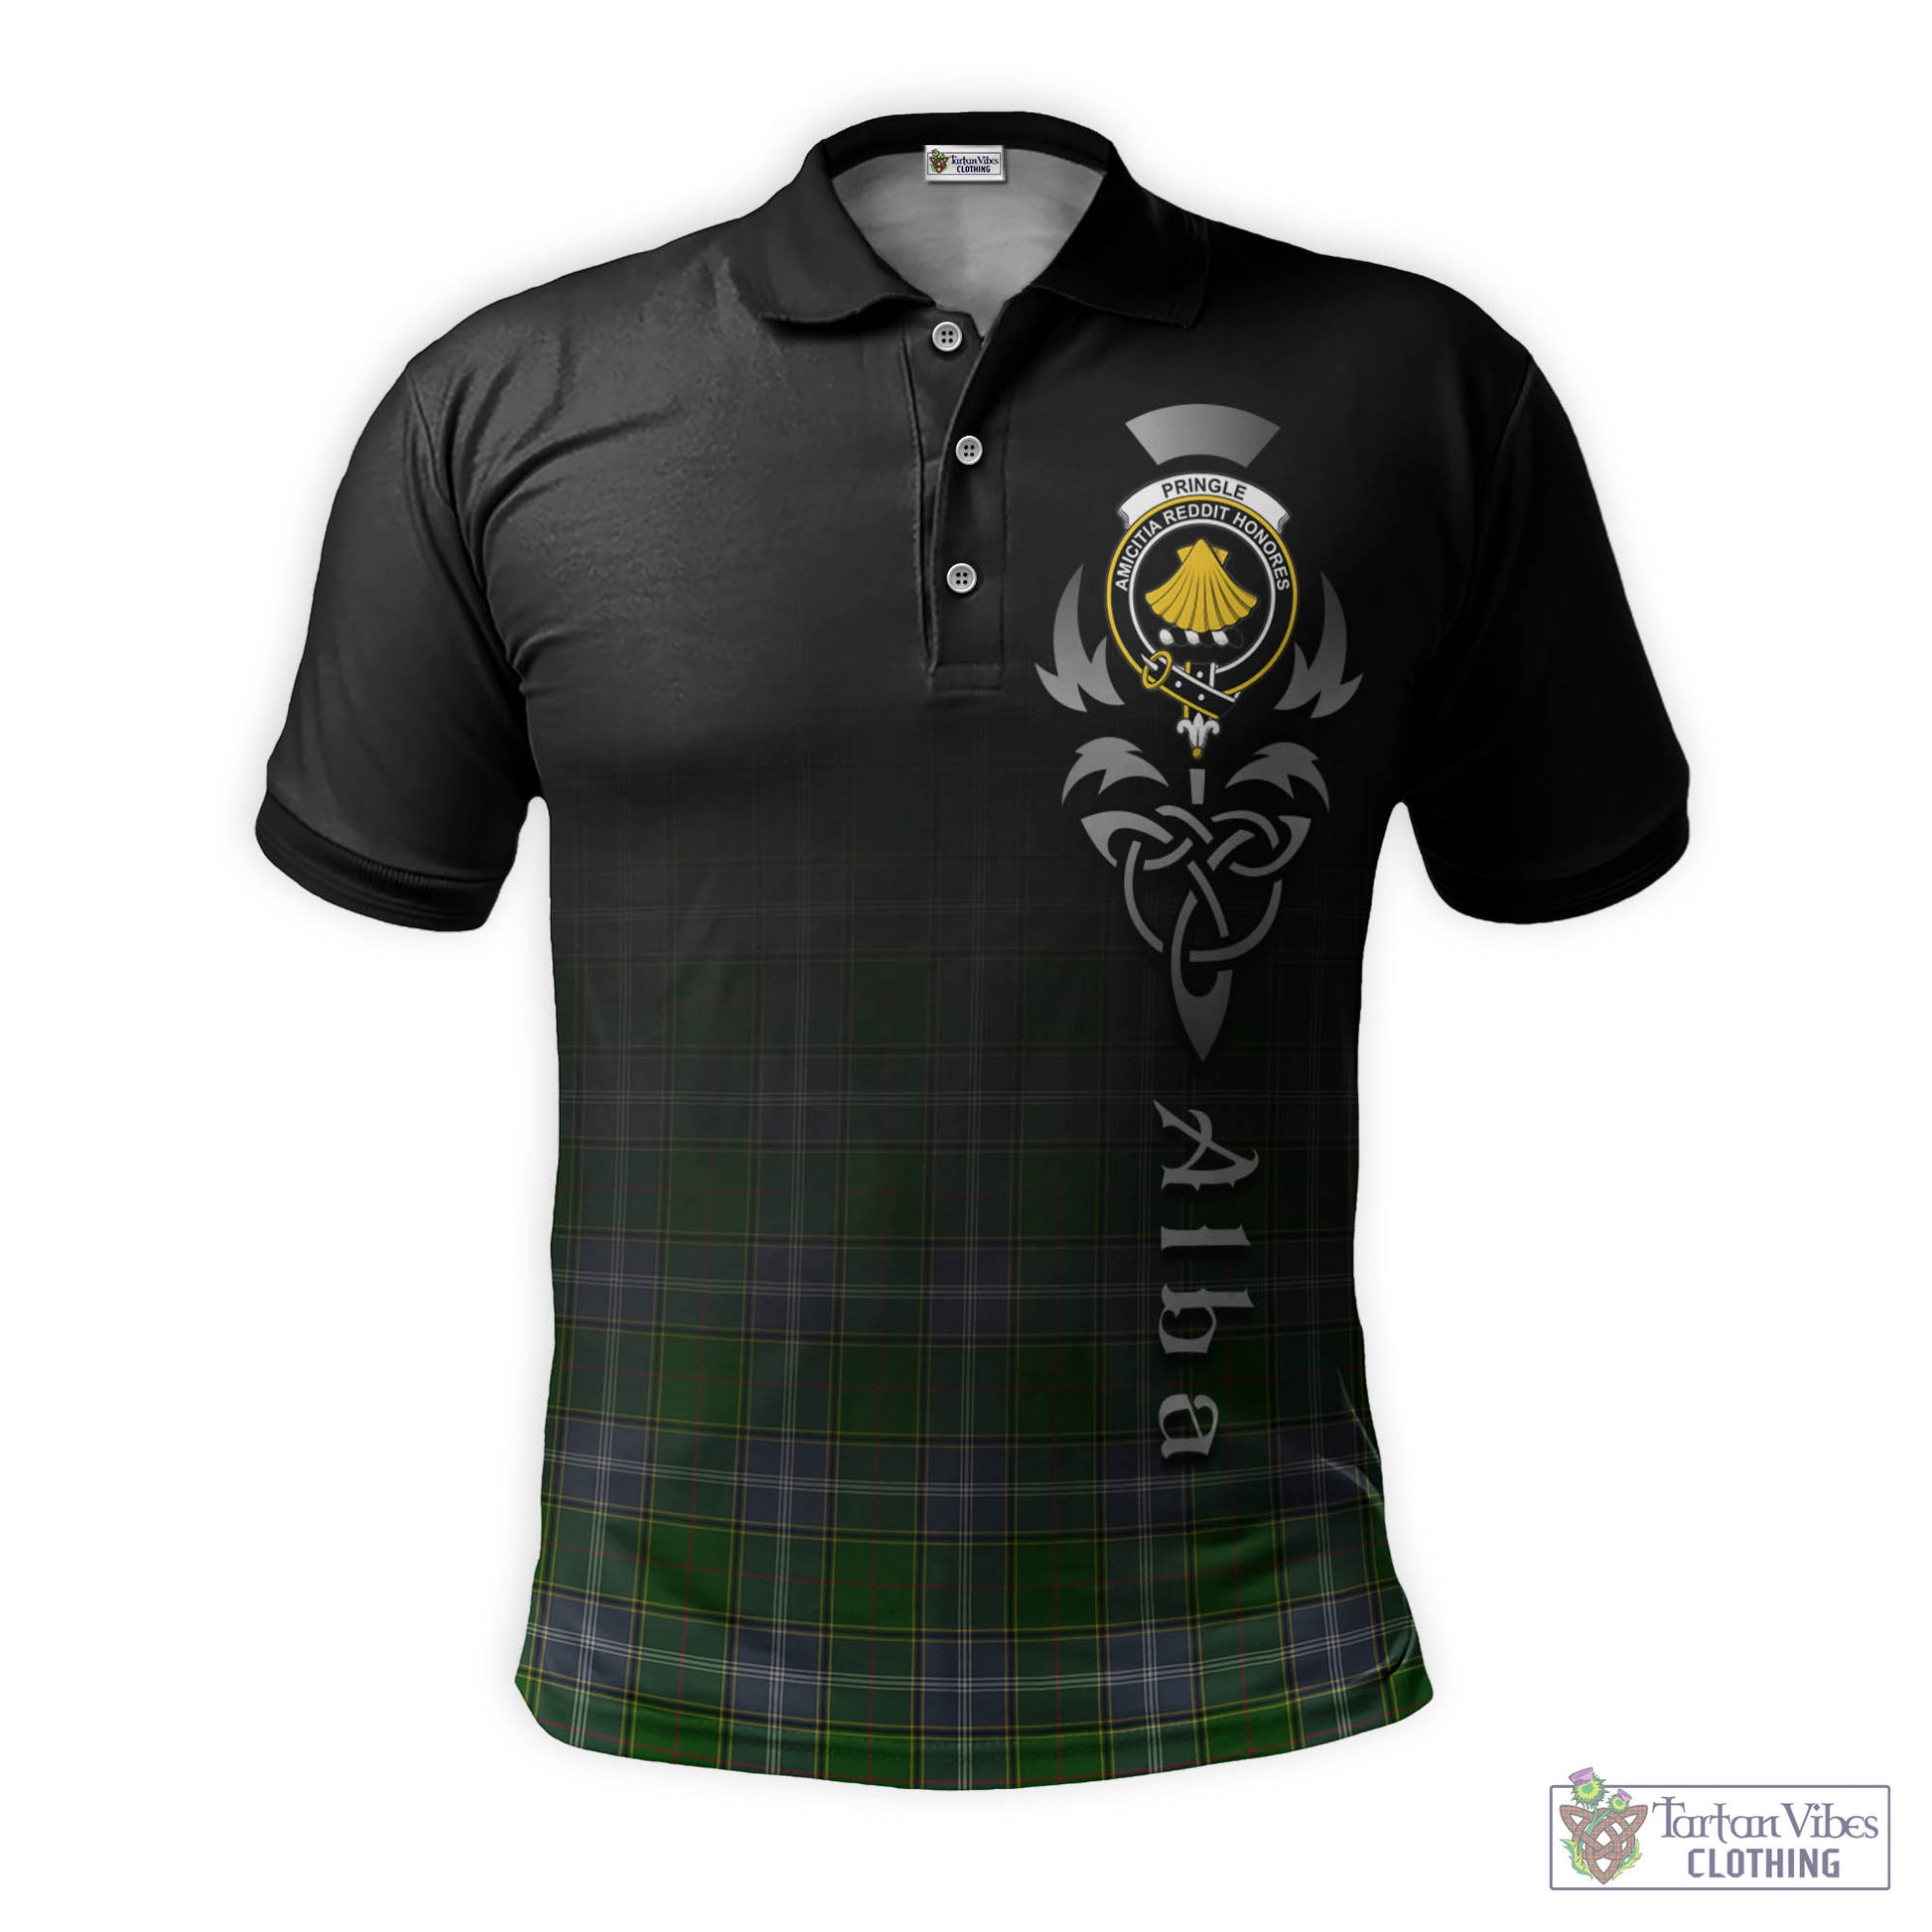 Tartan Vibes Clothing Pringle Tartan Polo Shirt Featuring Alba Gu Brath Family Crest Celtic Inspired